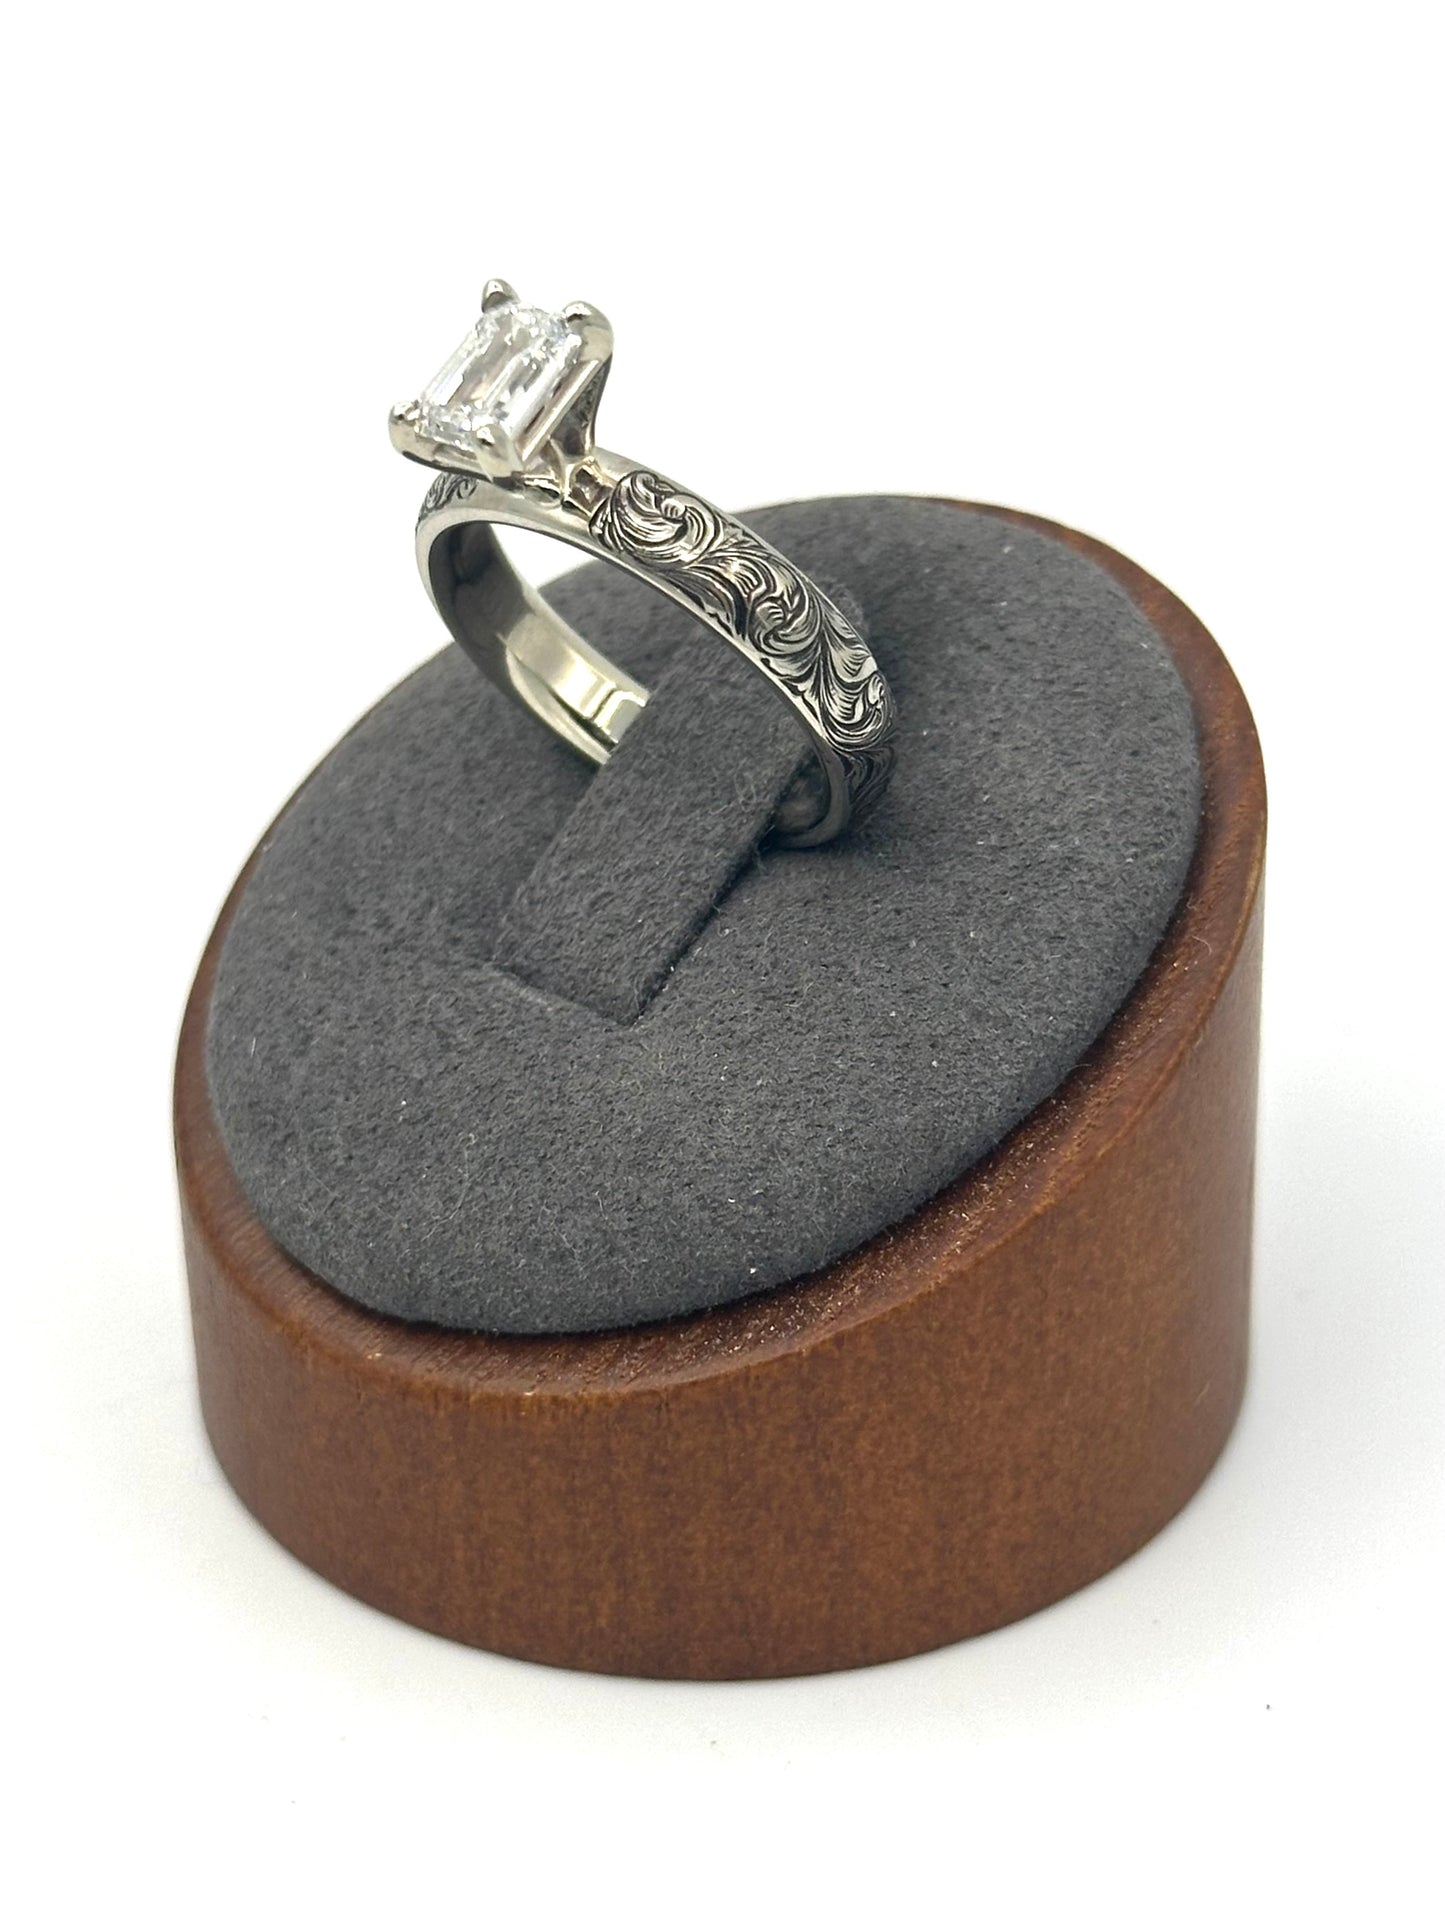 Custom Engagement Ring